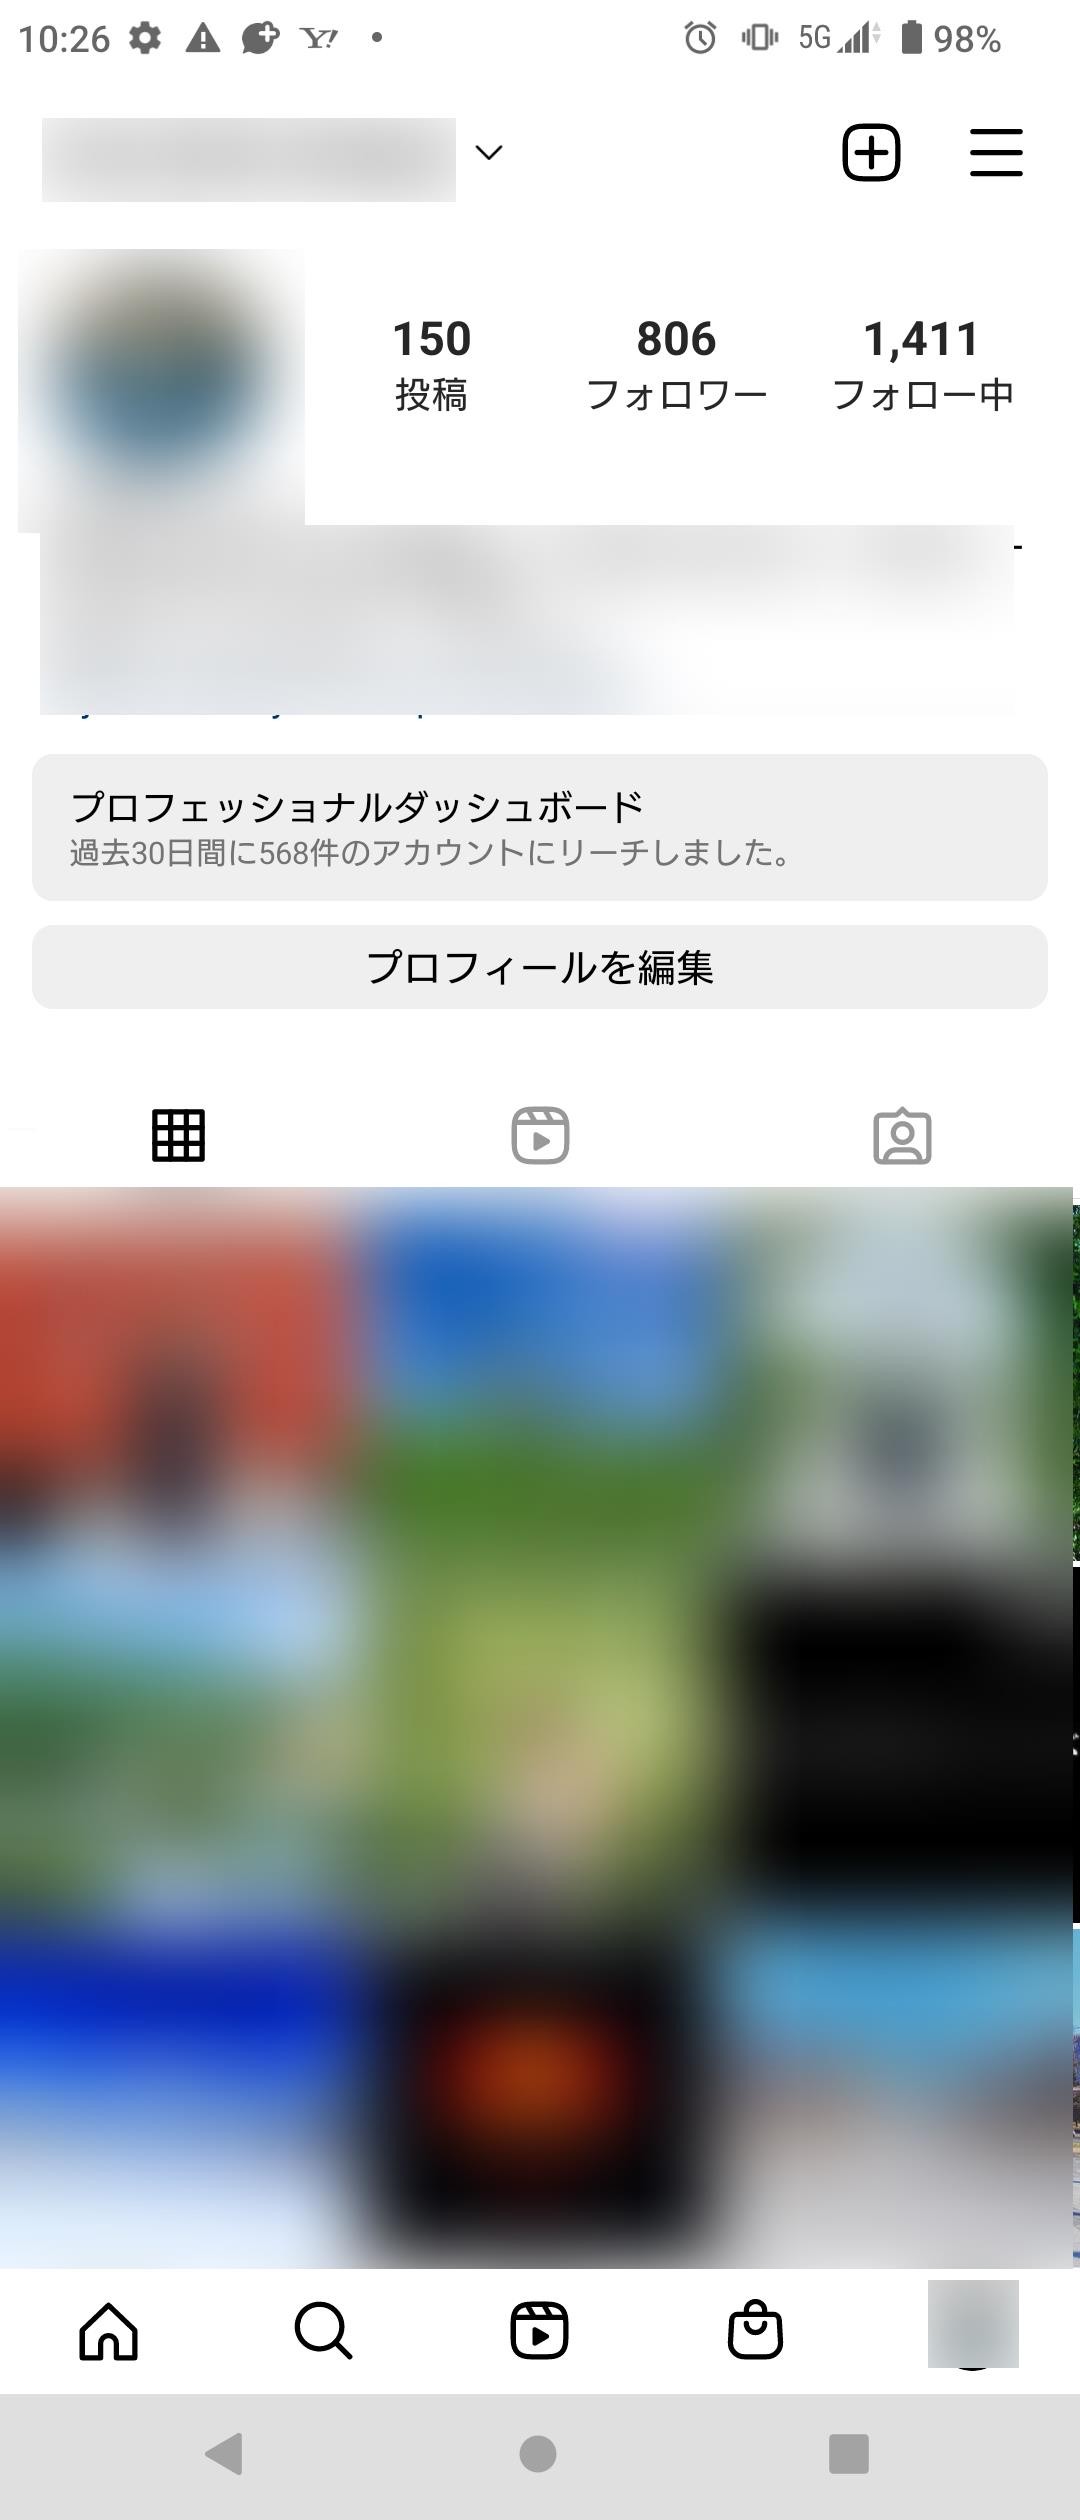 Instagramアカウント画面